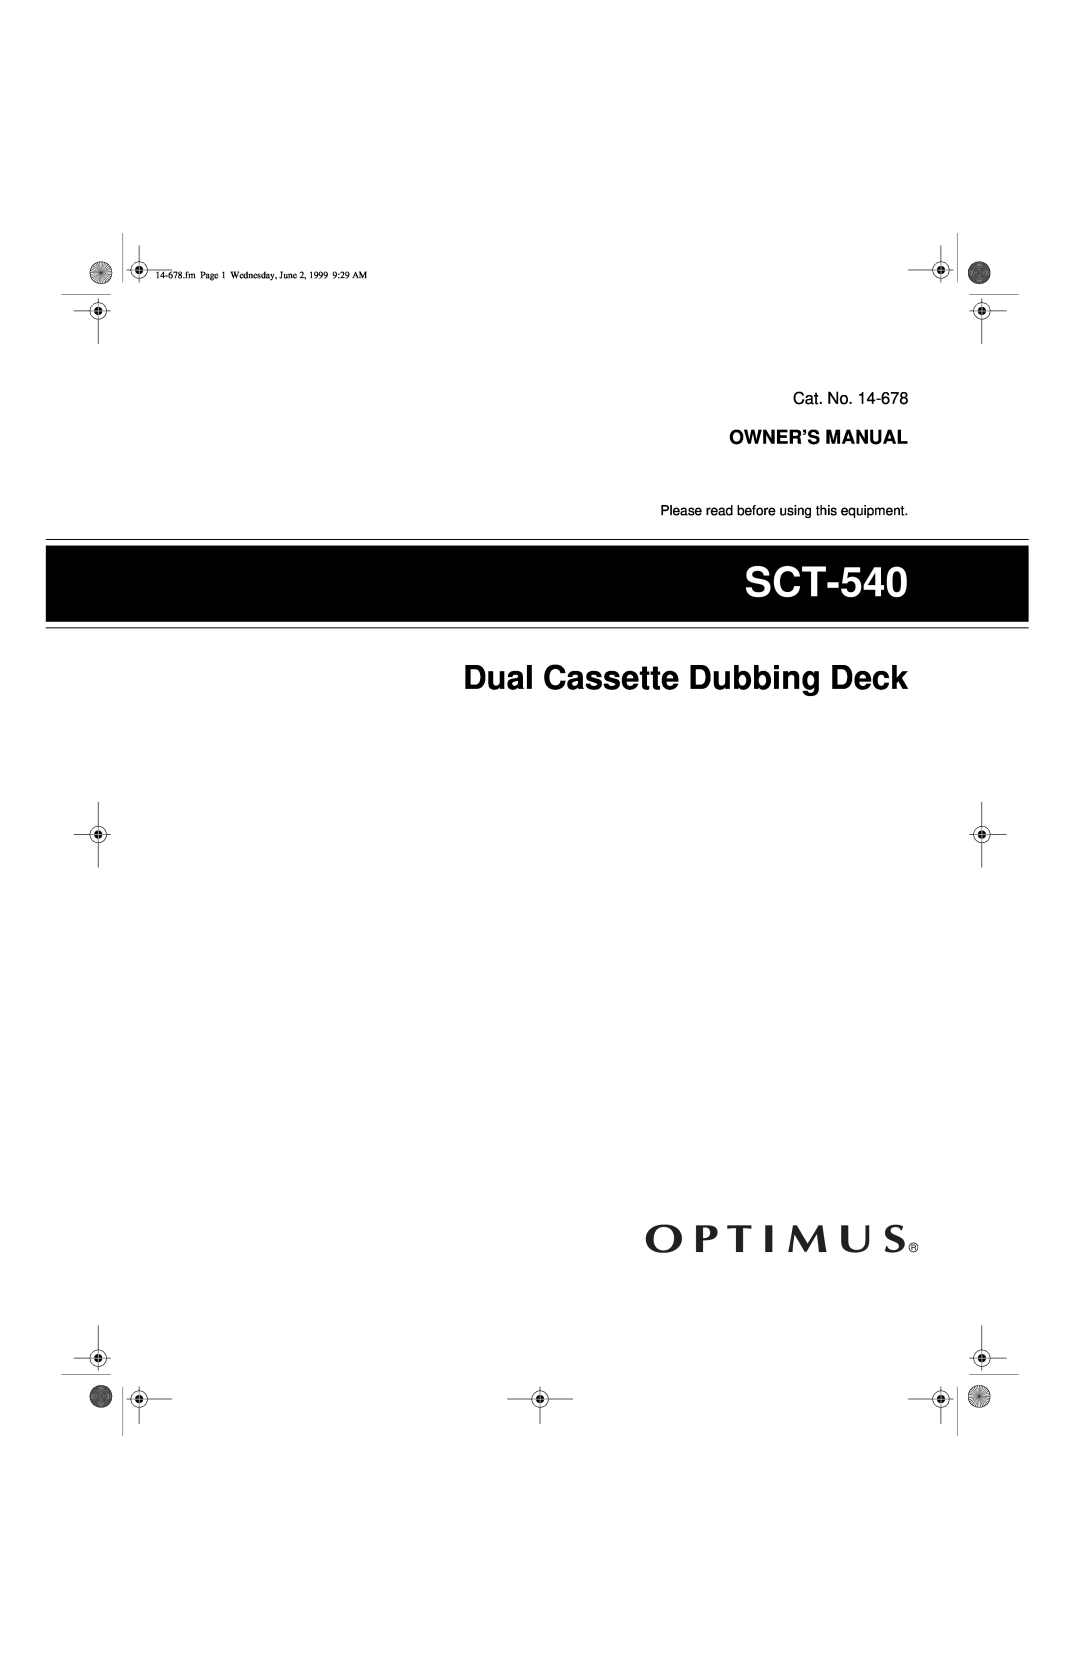 Optimus - Katadyn Products Inc SCT-540 owner manual Dual Cassette Dubbing Deck, Cat. No 